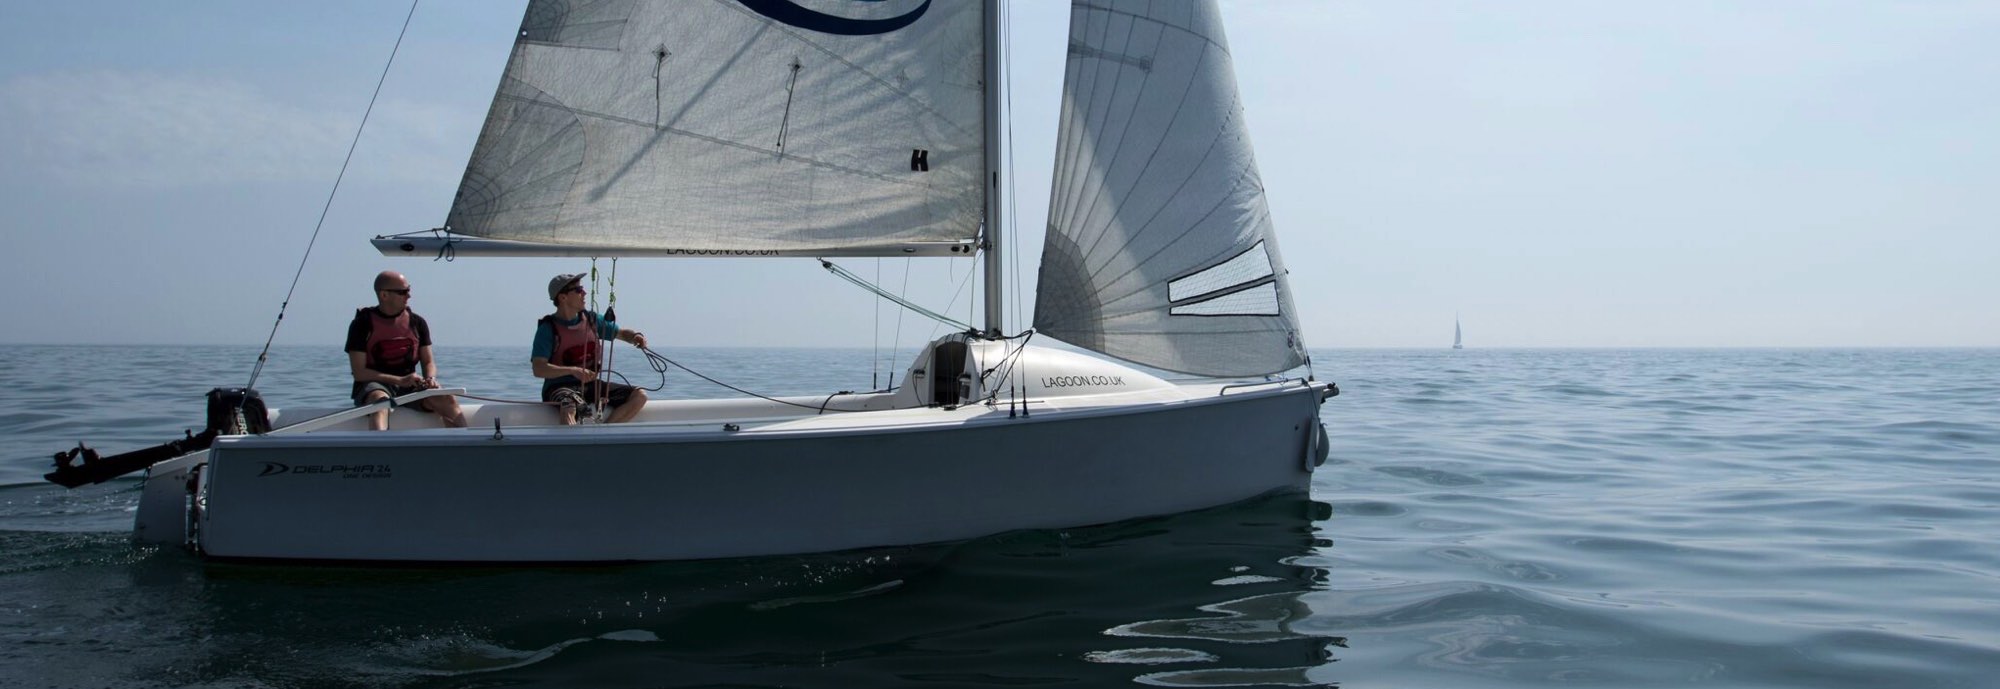 windsurf sailing yacht